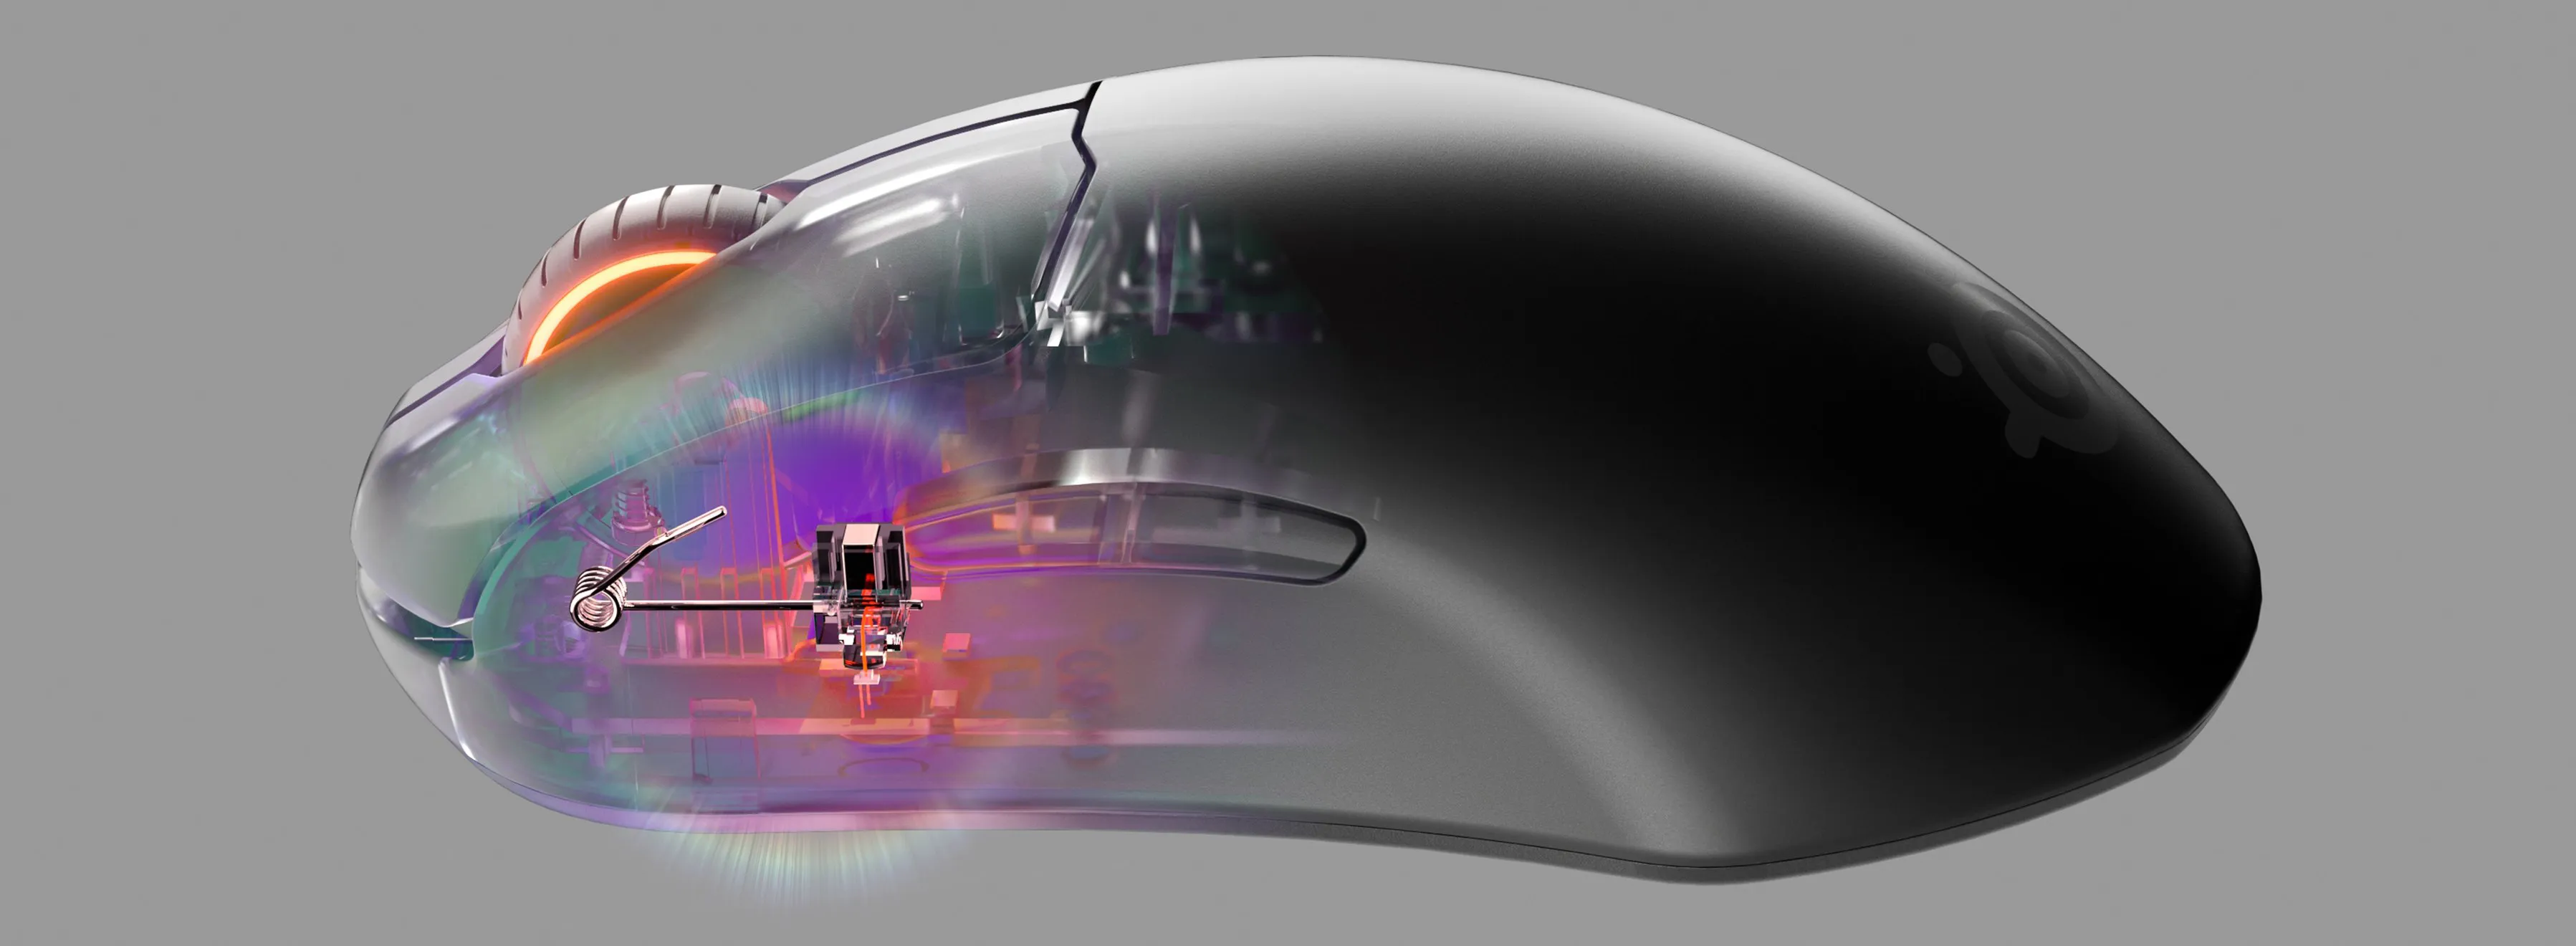 SteelSeries Prime Wireless mini gaming mouse Ǻ